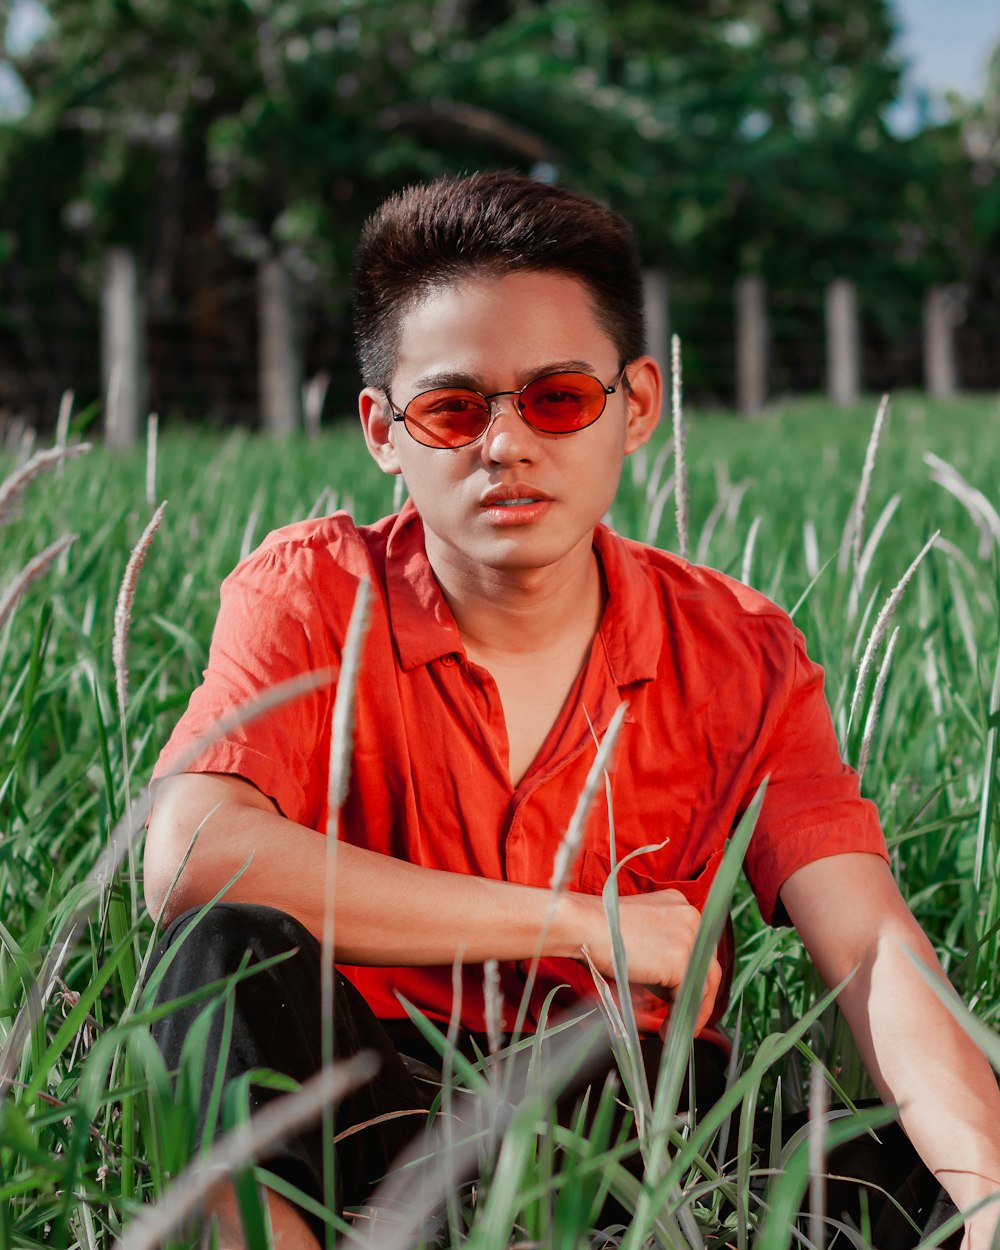 man wearing red dress shirt and sunglasses sitting on grass